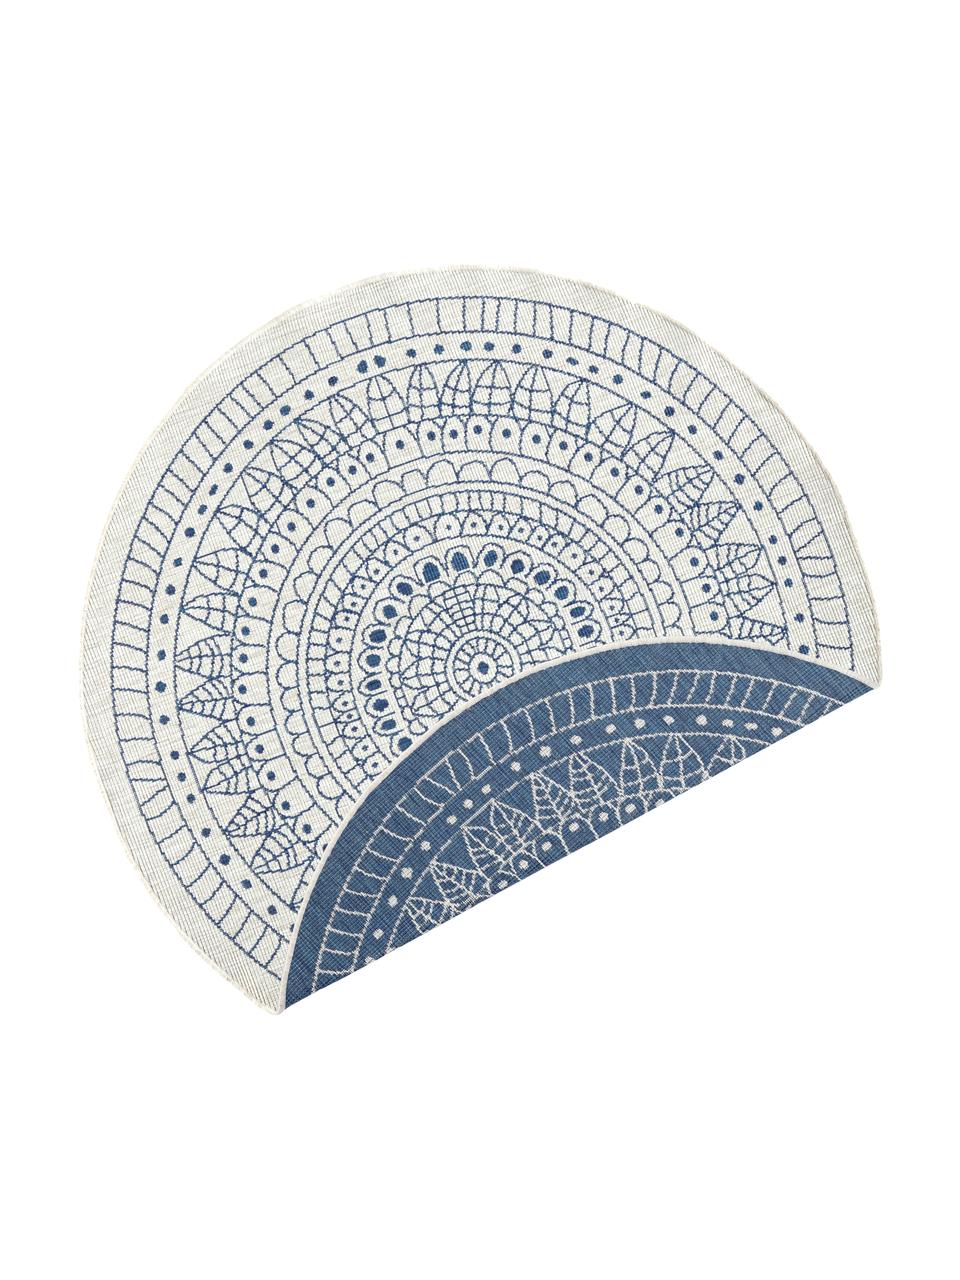 Alfombra redonda reversible de interior/exterior Porto, Azul, crema, Ø 200 cm (Tamaño L)